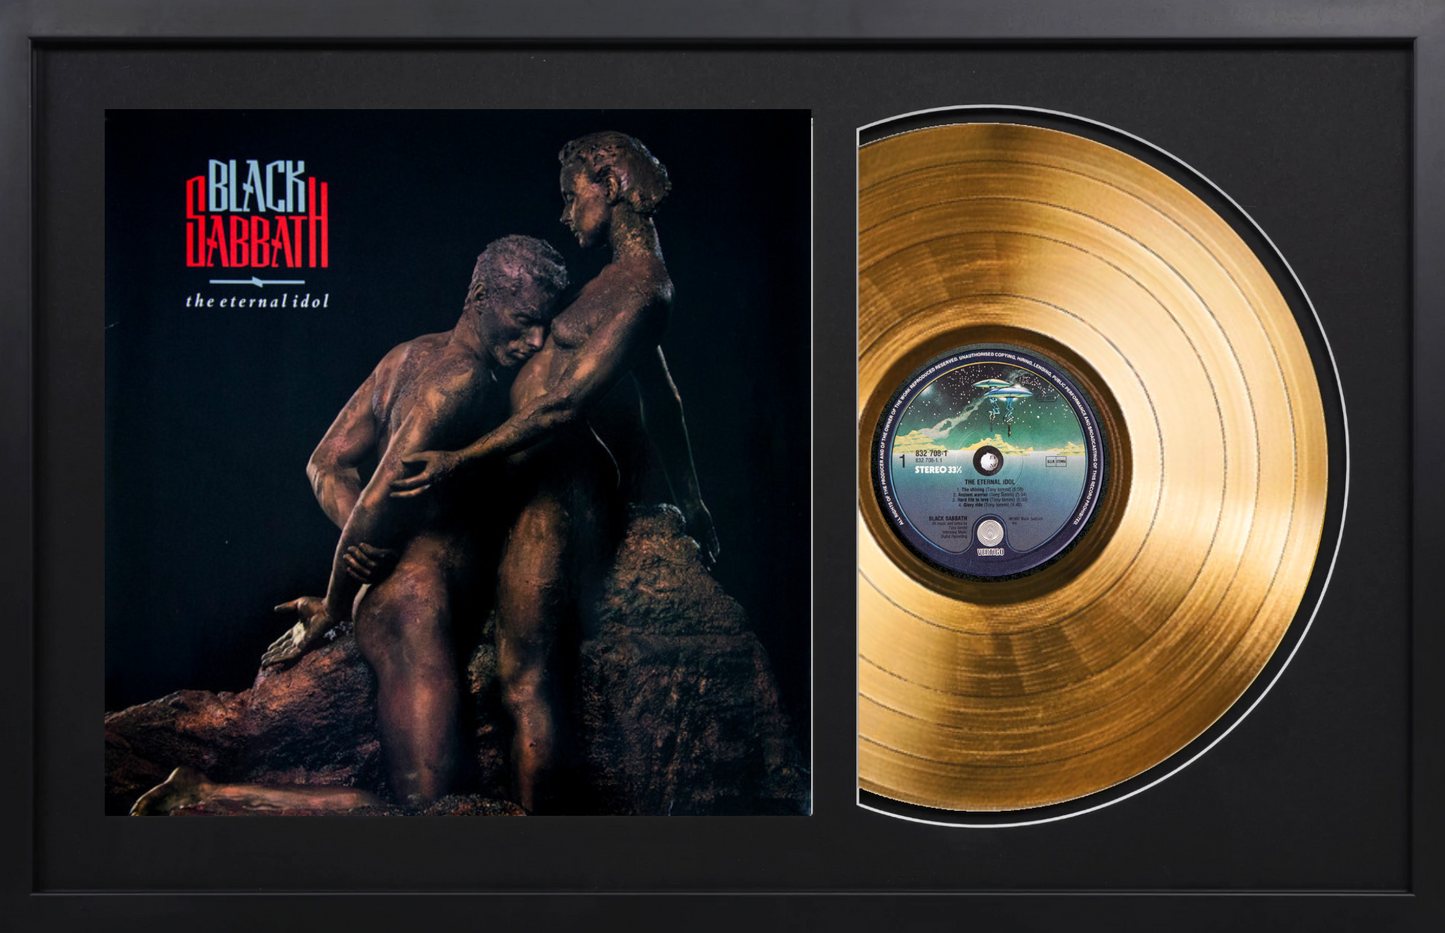 Black Sabbath - The Eternal Idol - 14K Gold Plated Vinyl